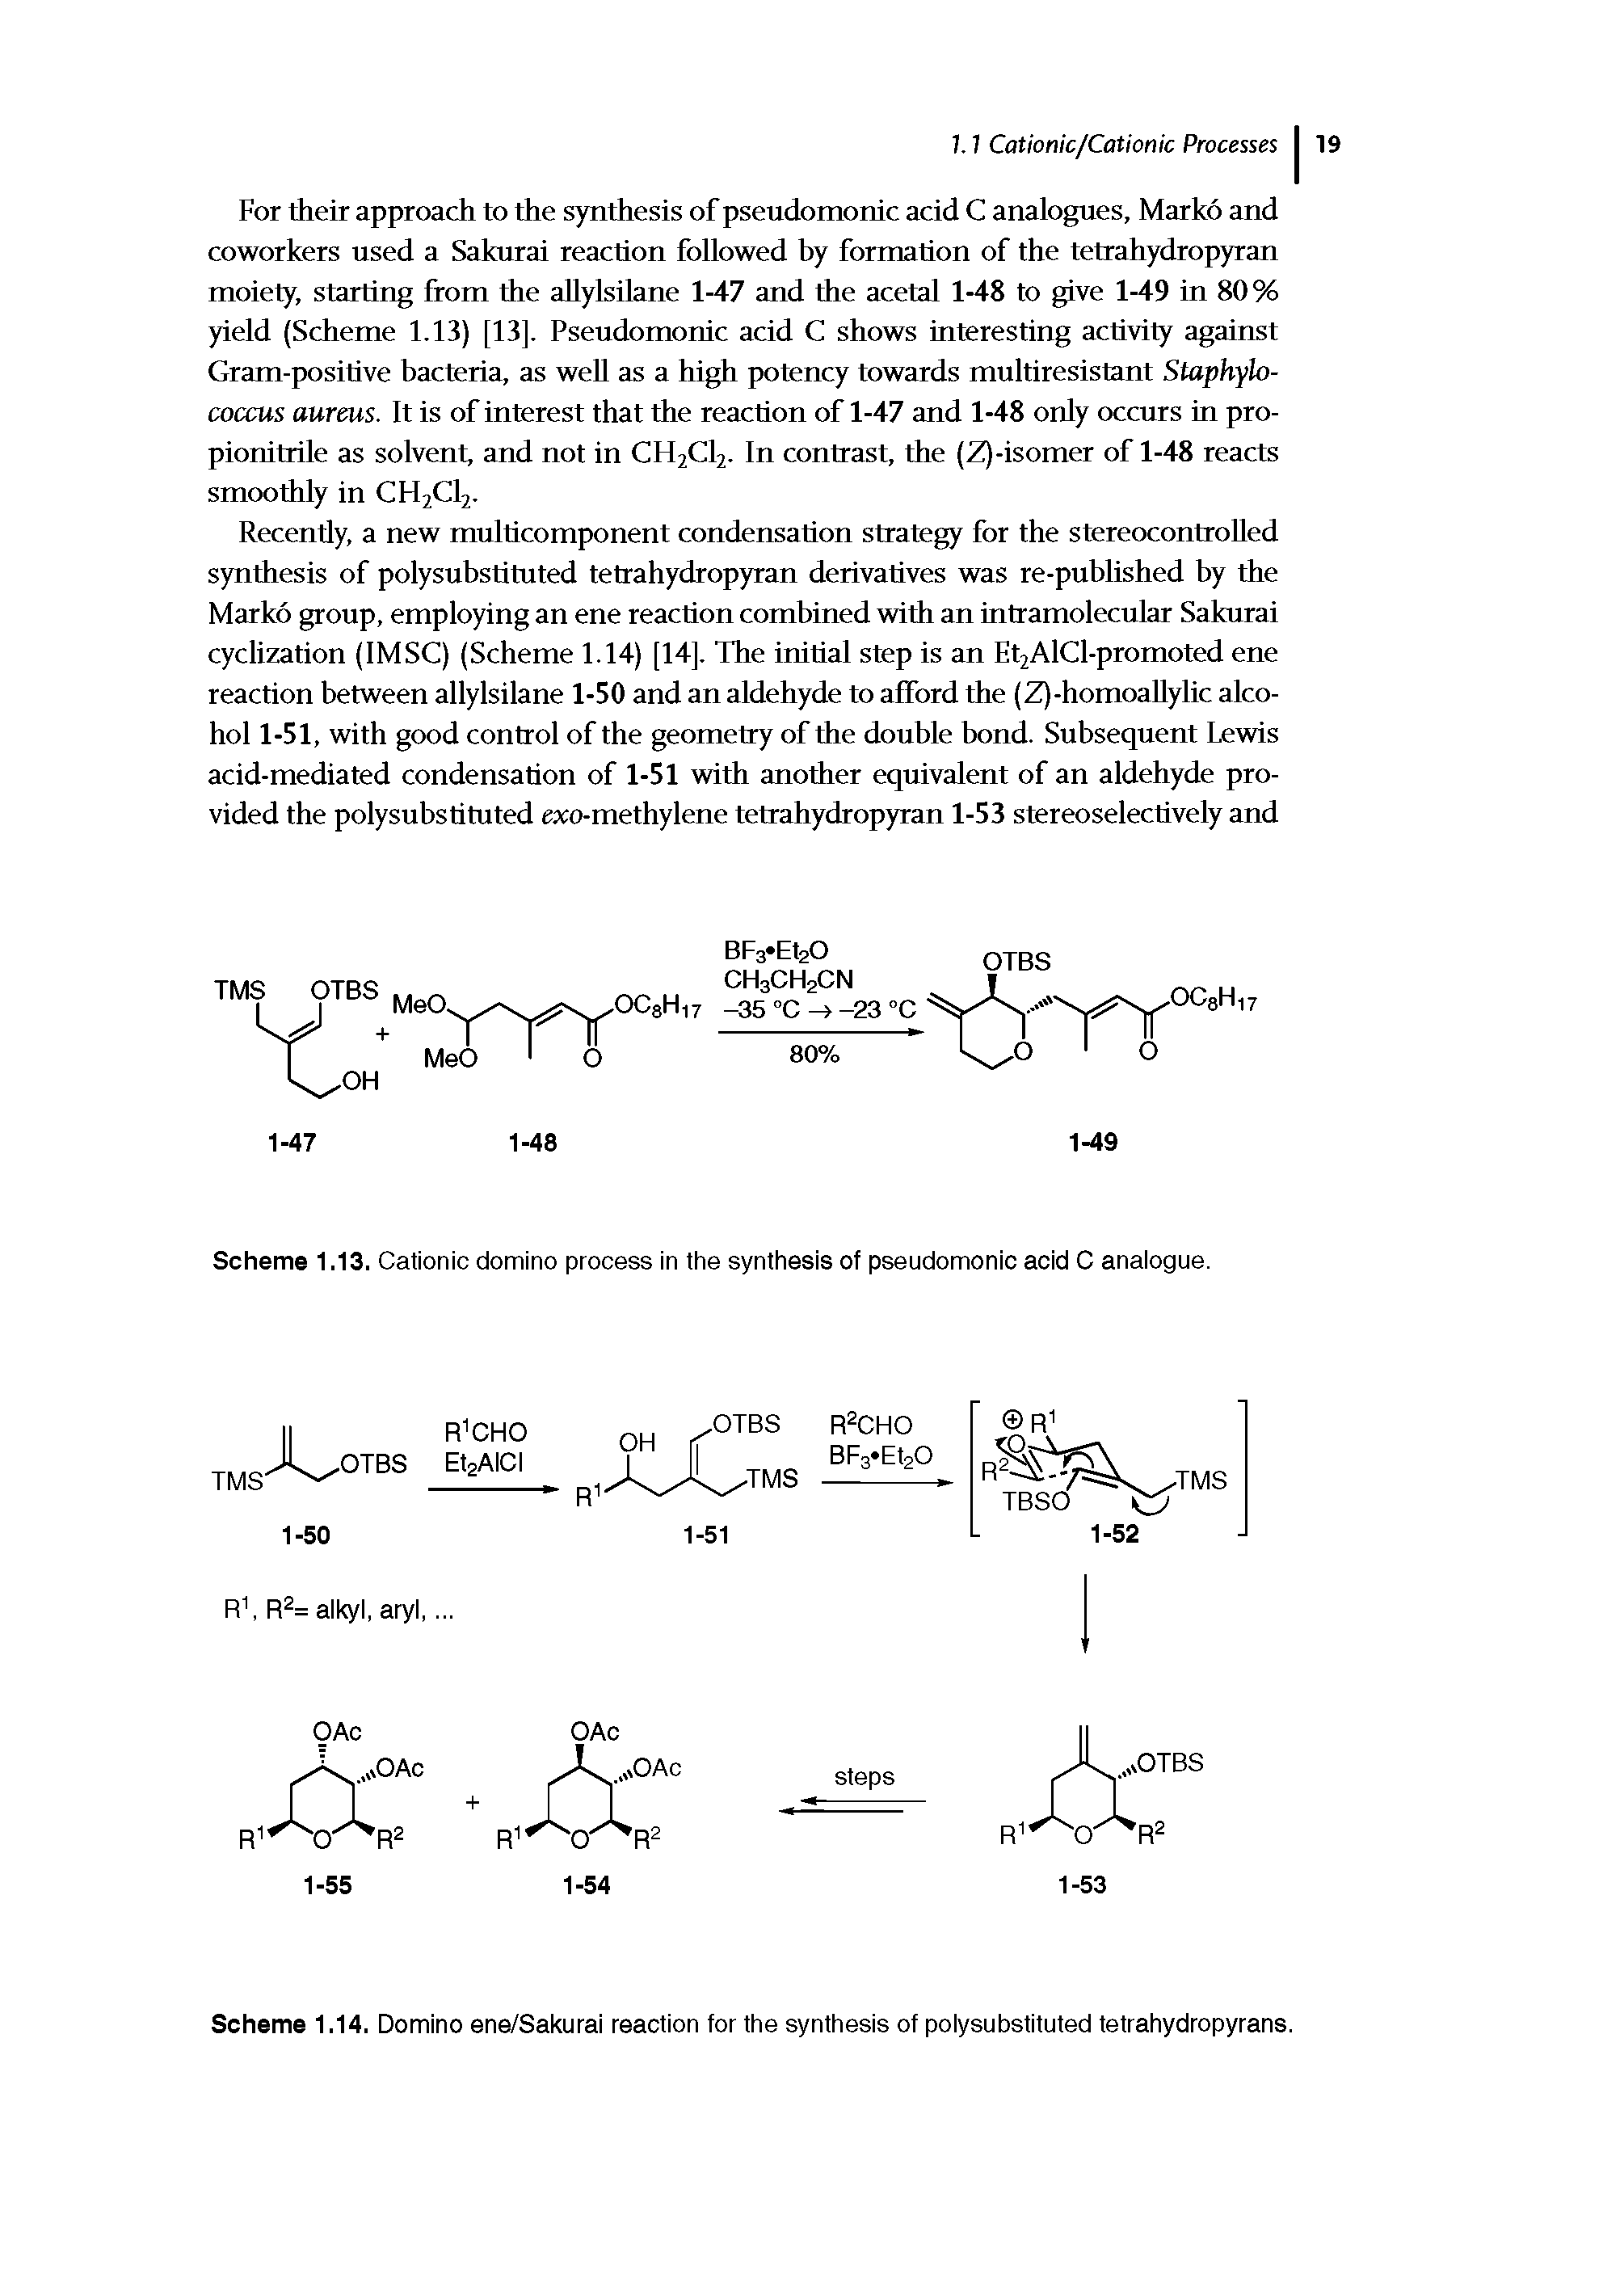 Scheme 1.14. Domino ene/Sakurai reaction for the synthesis of polysubstituted tetrahydropyrans.